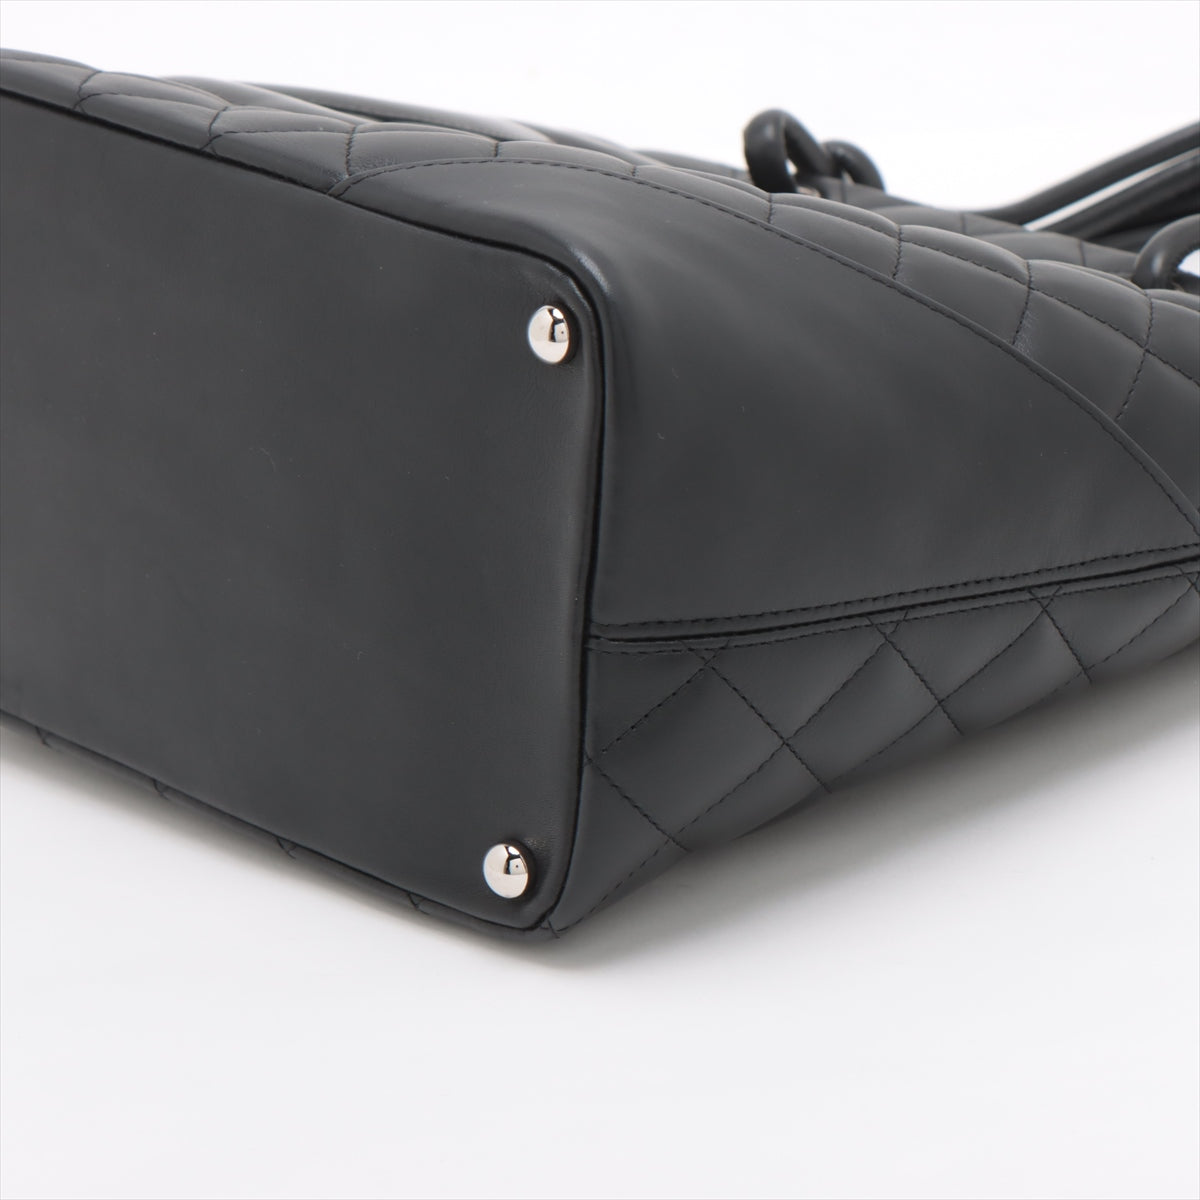 Chanel Combon Line Patent Leather   Handbag Black Silver G